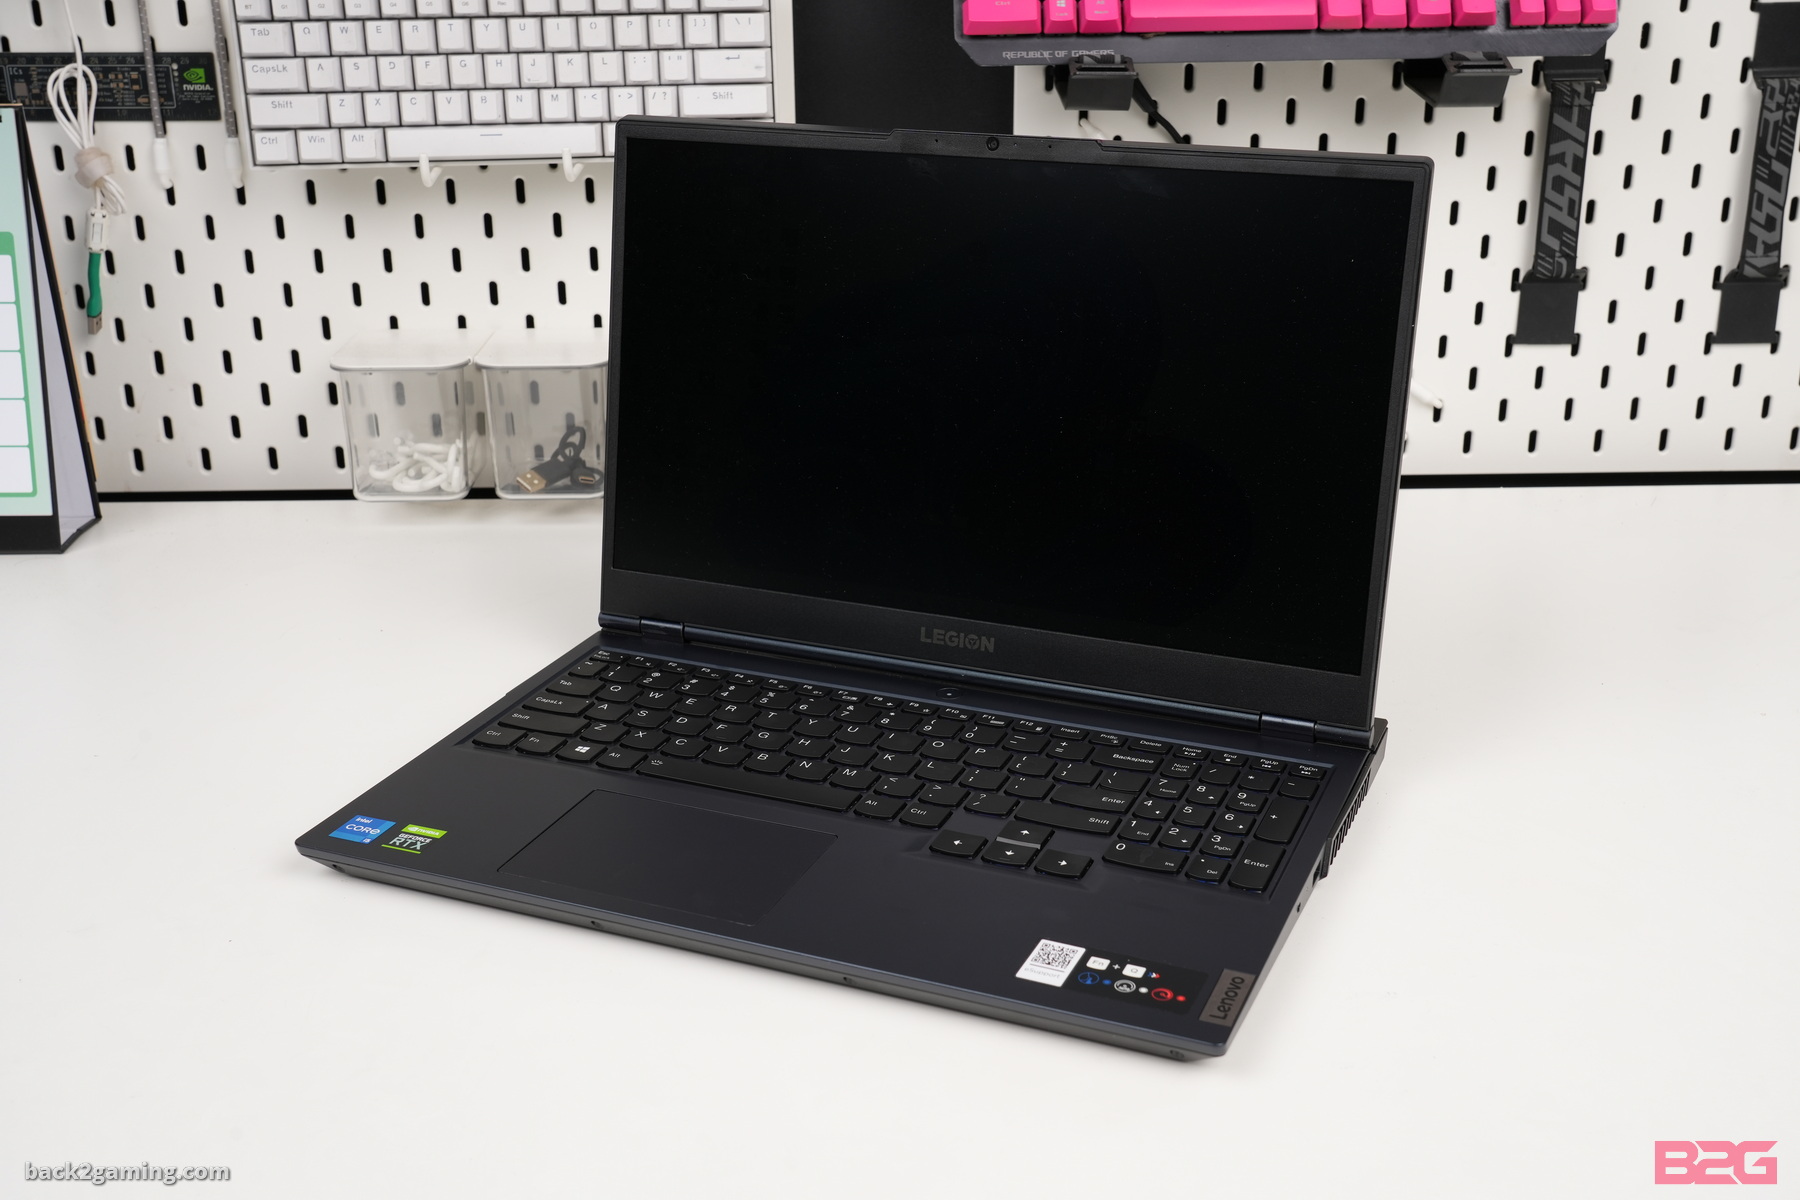 Lenovo Legion 5I 2021 (I5-11400H+Rtx 3060) Laptop Review